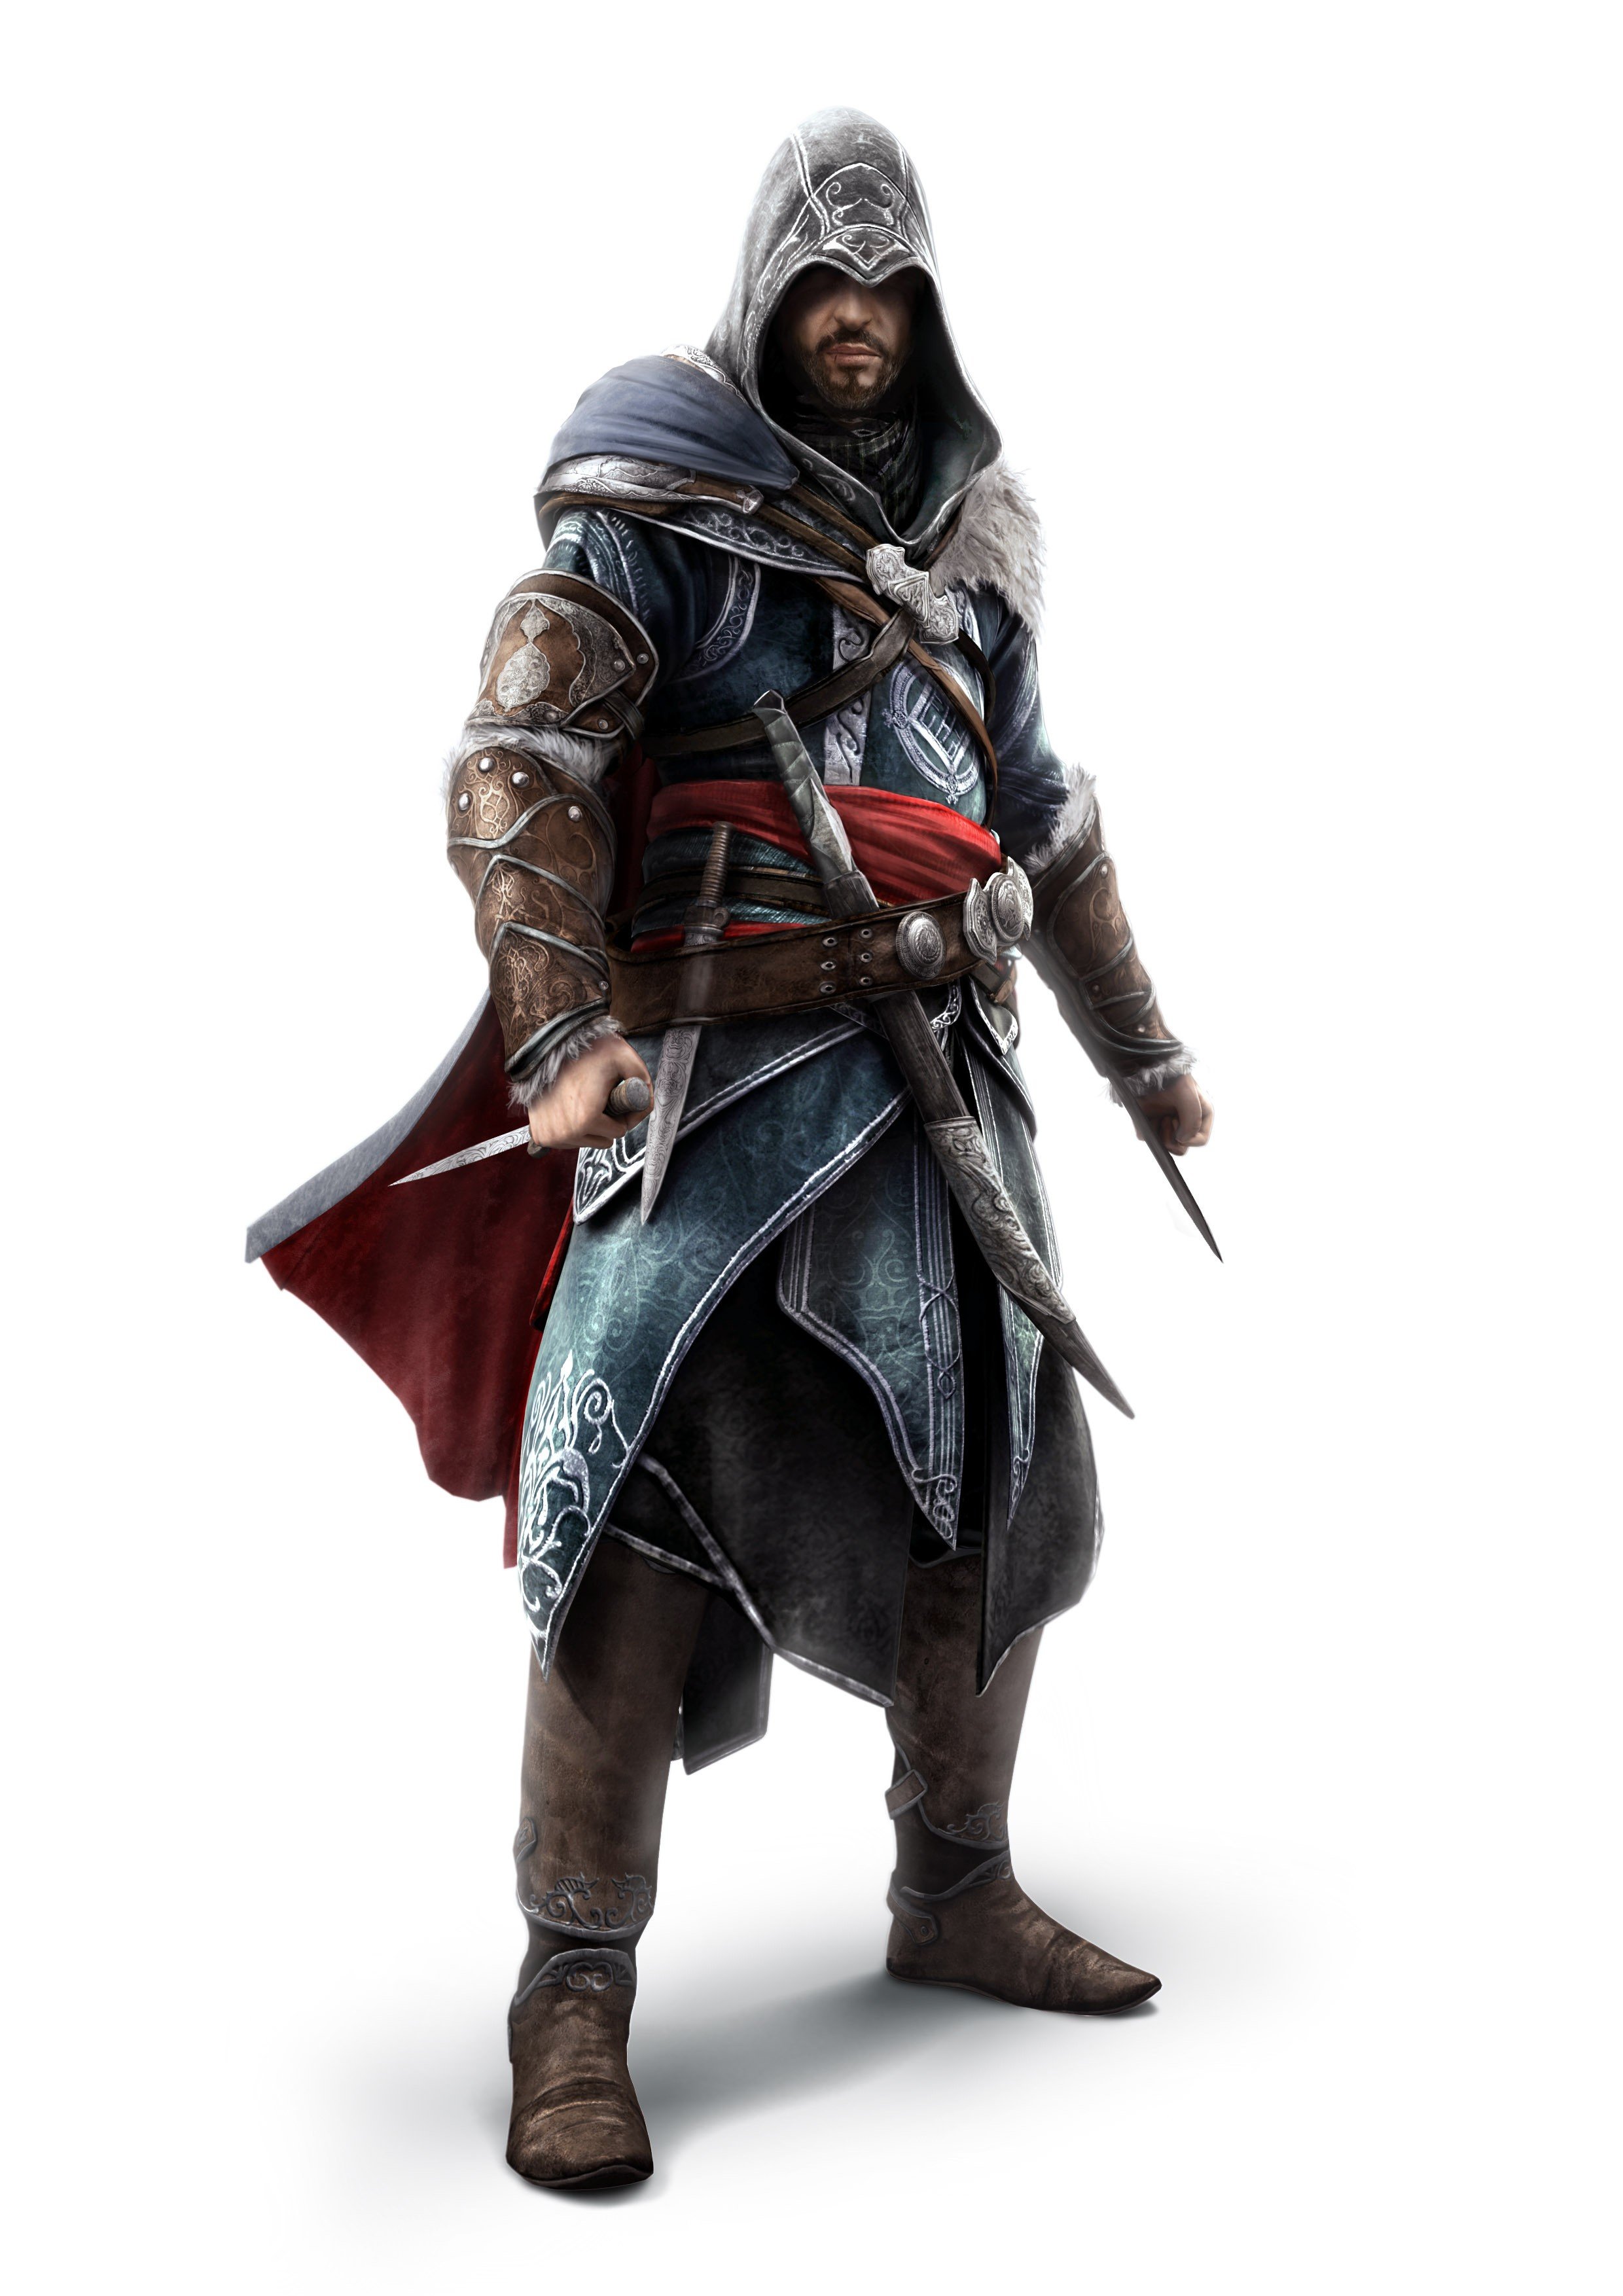 Bonde stribe Kæreste Final Fantasy XIII-2 has Assassin's Creed: Revelations costume - Gematsu